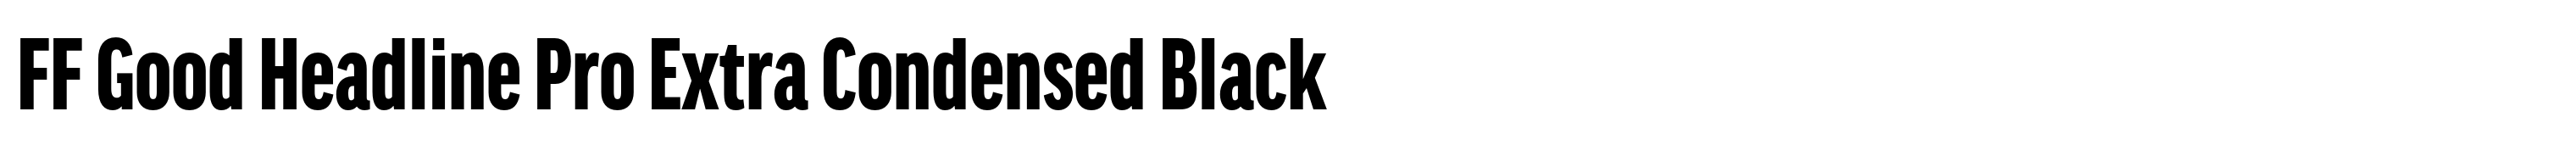 FF Good Headline Pro Extra Condensed Black